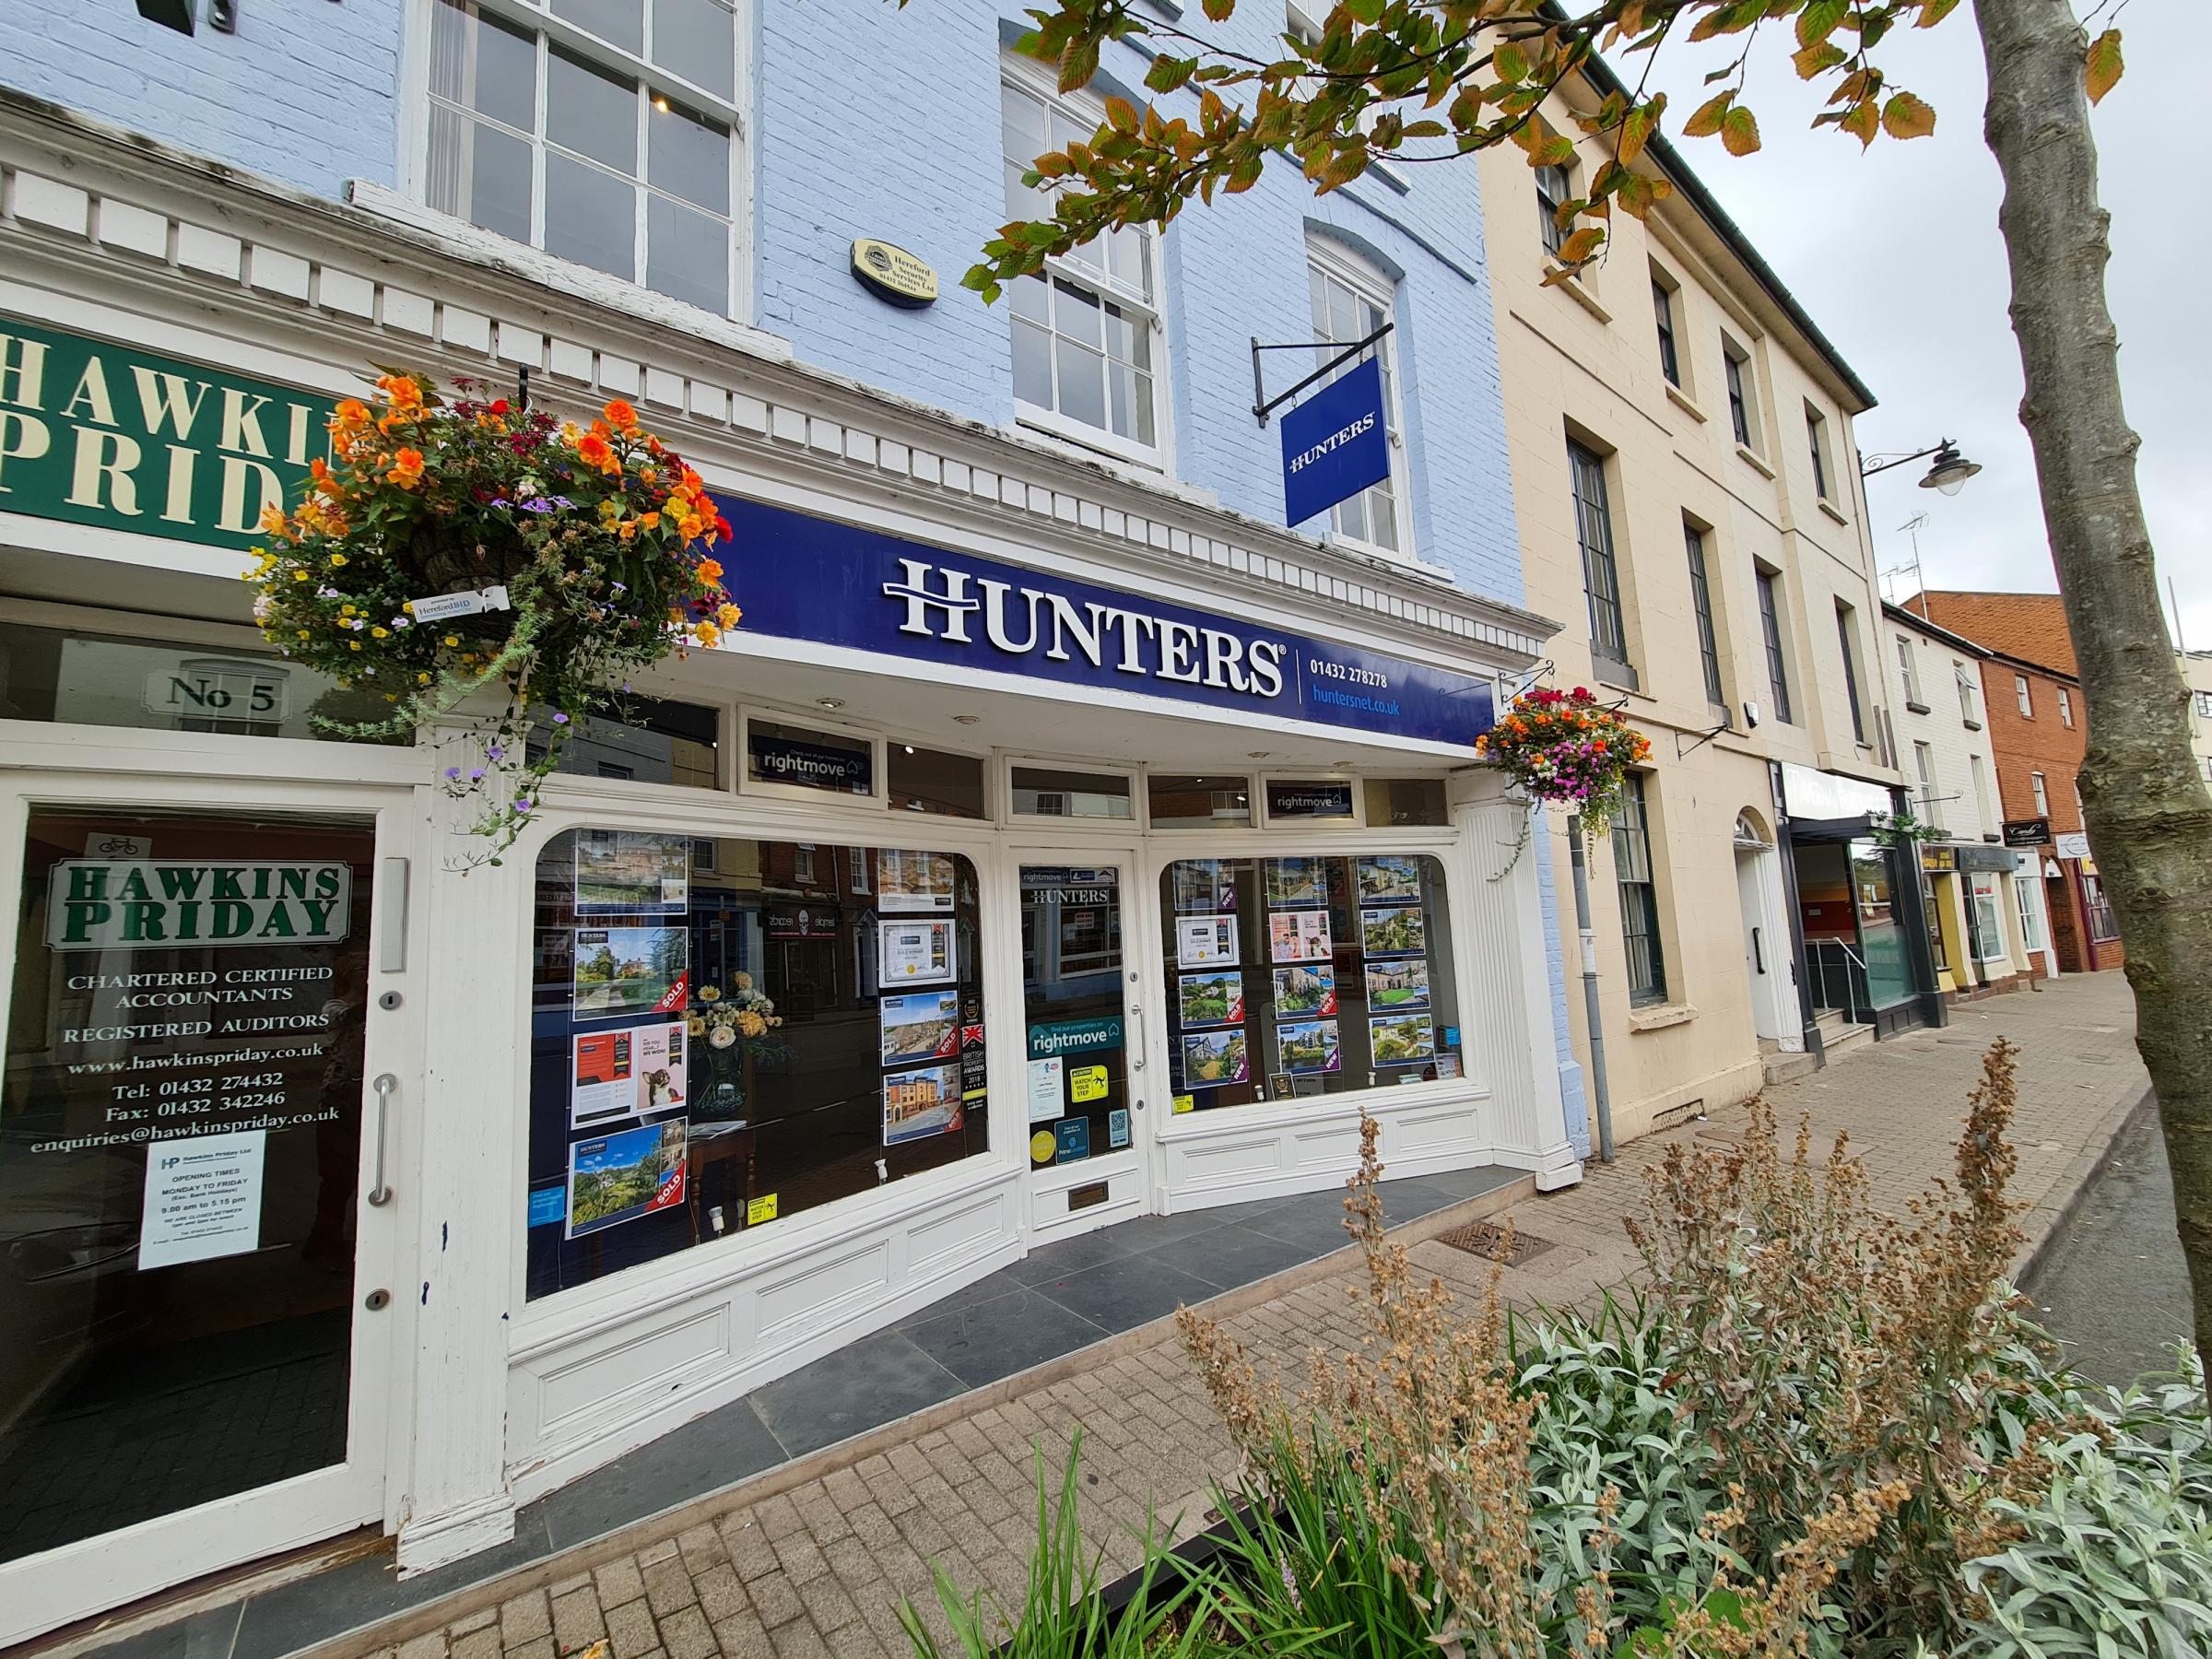 Hunters estate agents in Herefords Bridge Street has just won a prestigious award